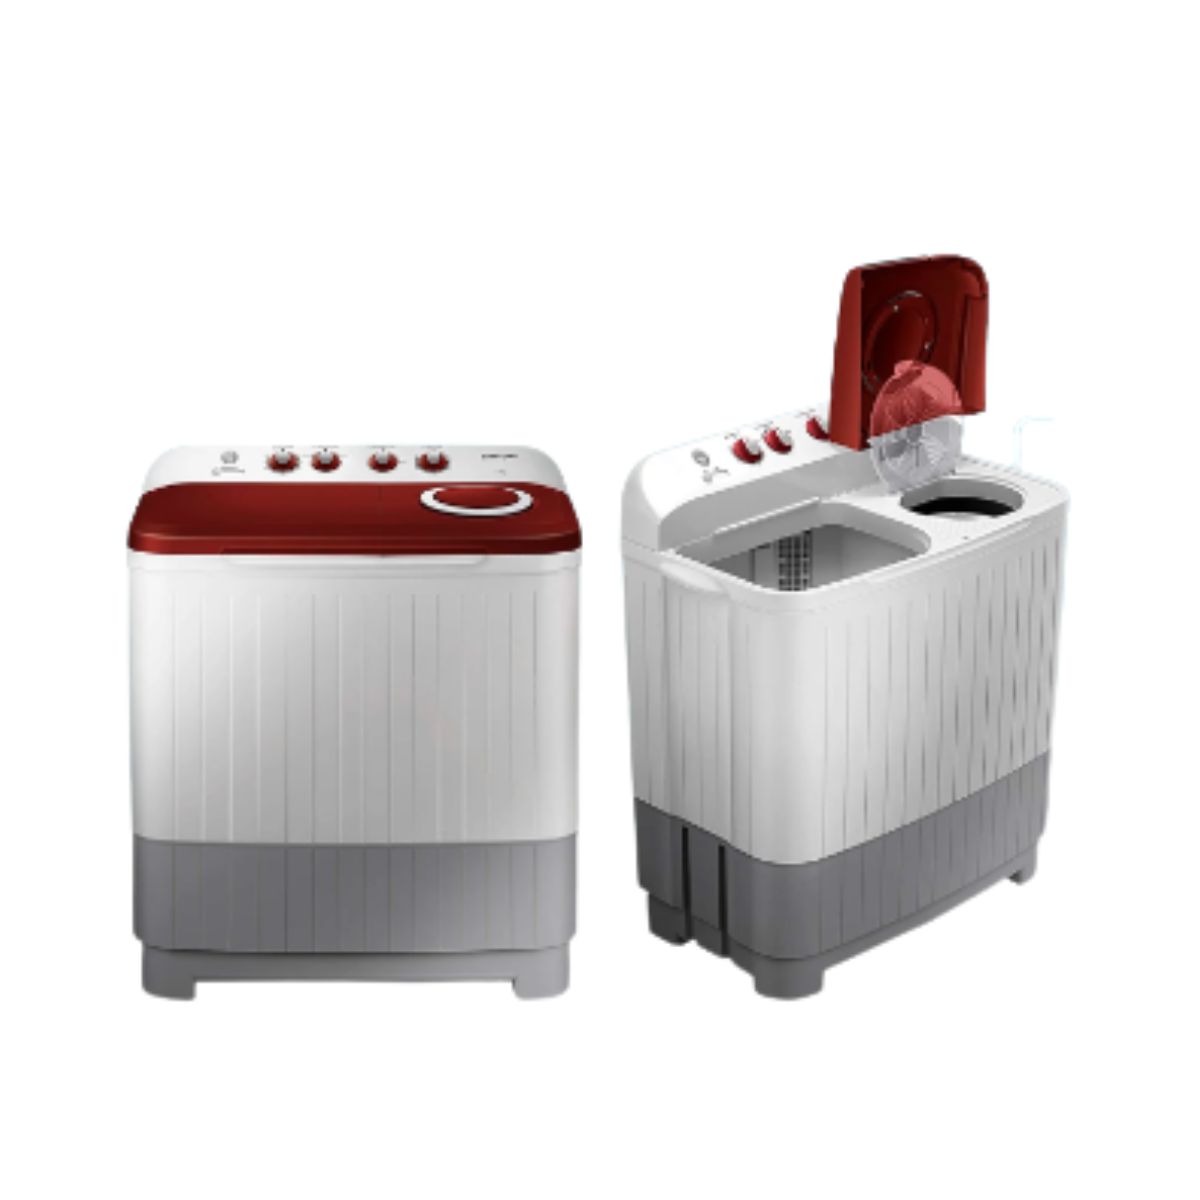 Samsung Washing Machine - Semi Automatic - WT70M3000HP - 7Kg